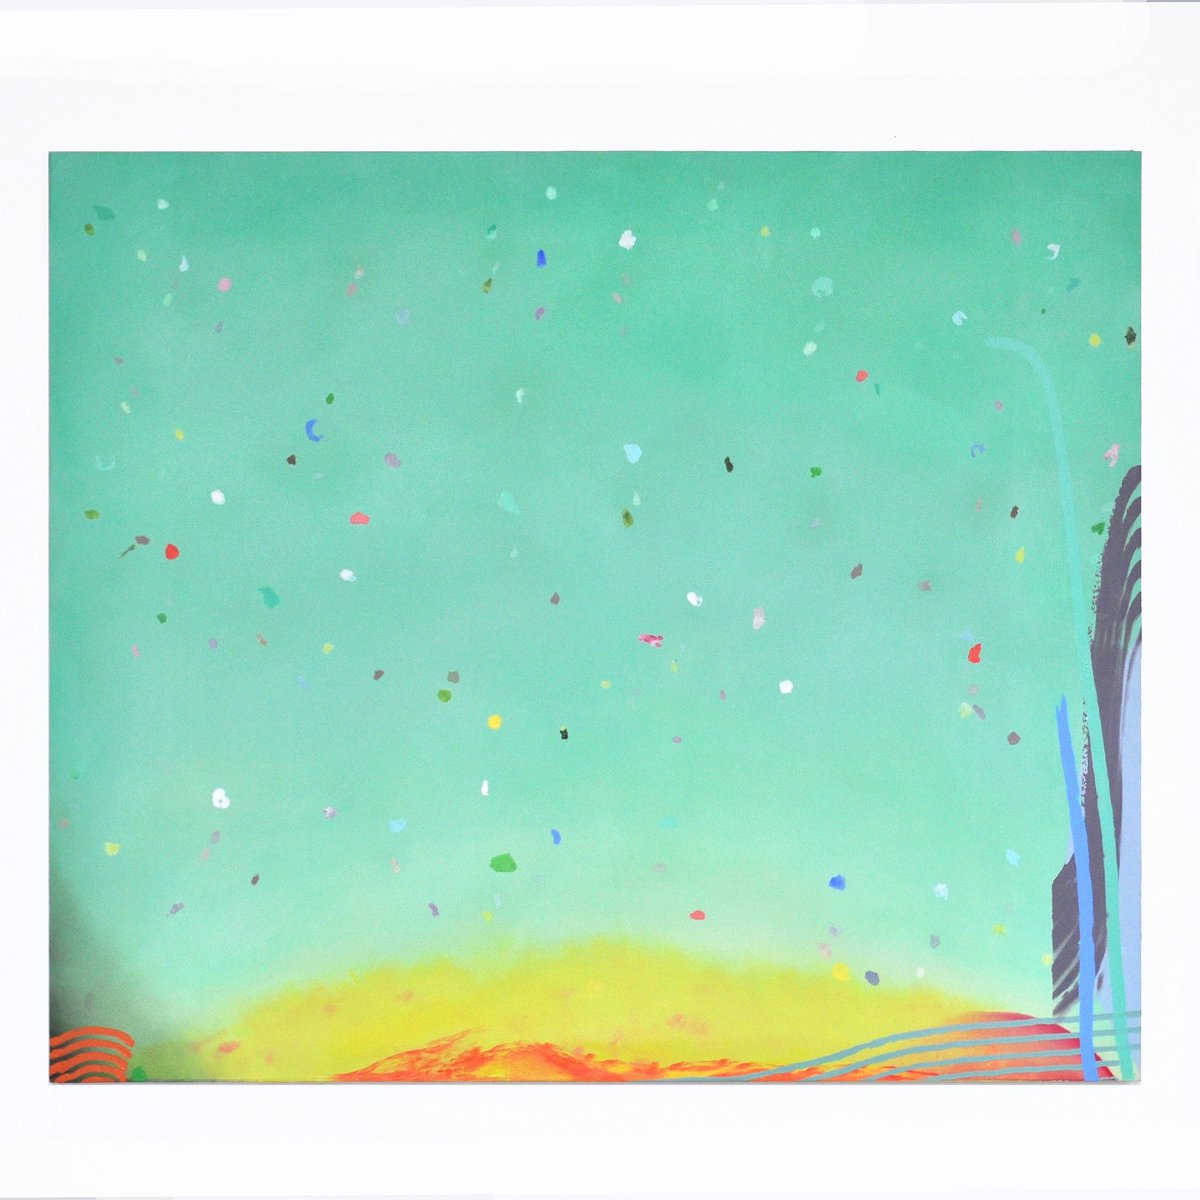 Au Jasmine 146x155 cm acrylic on canvas #sublime #againstbrexit #artisgoodforthesoul